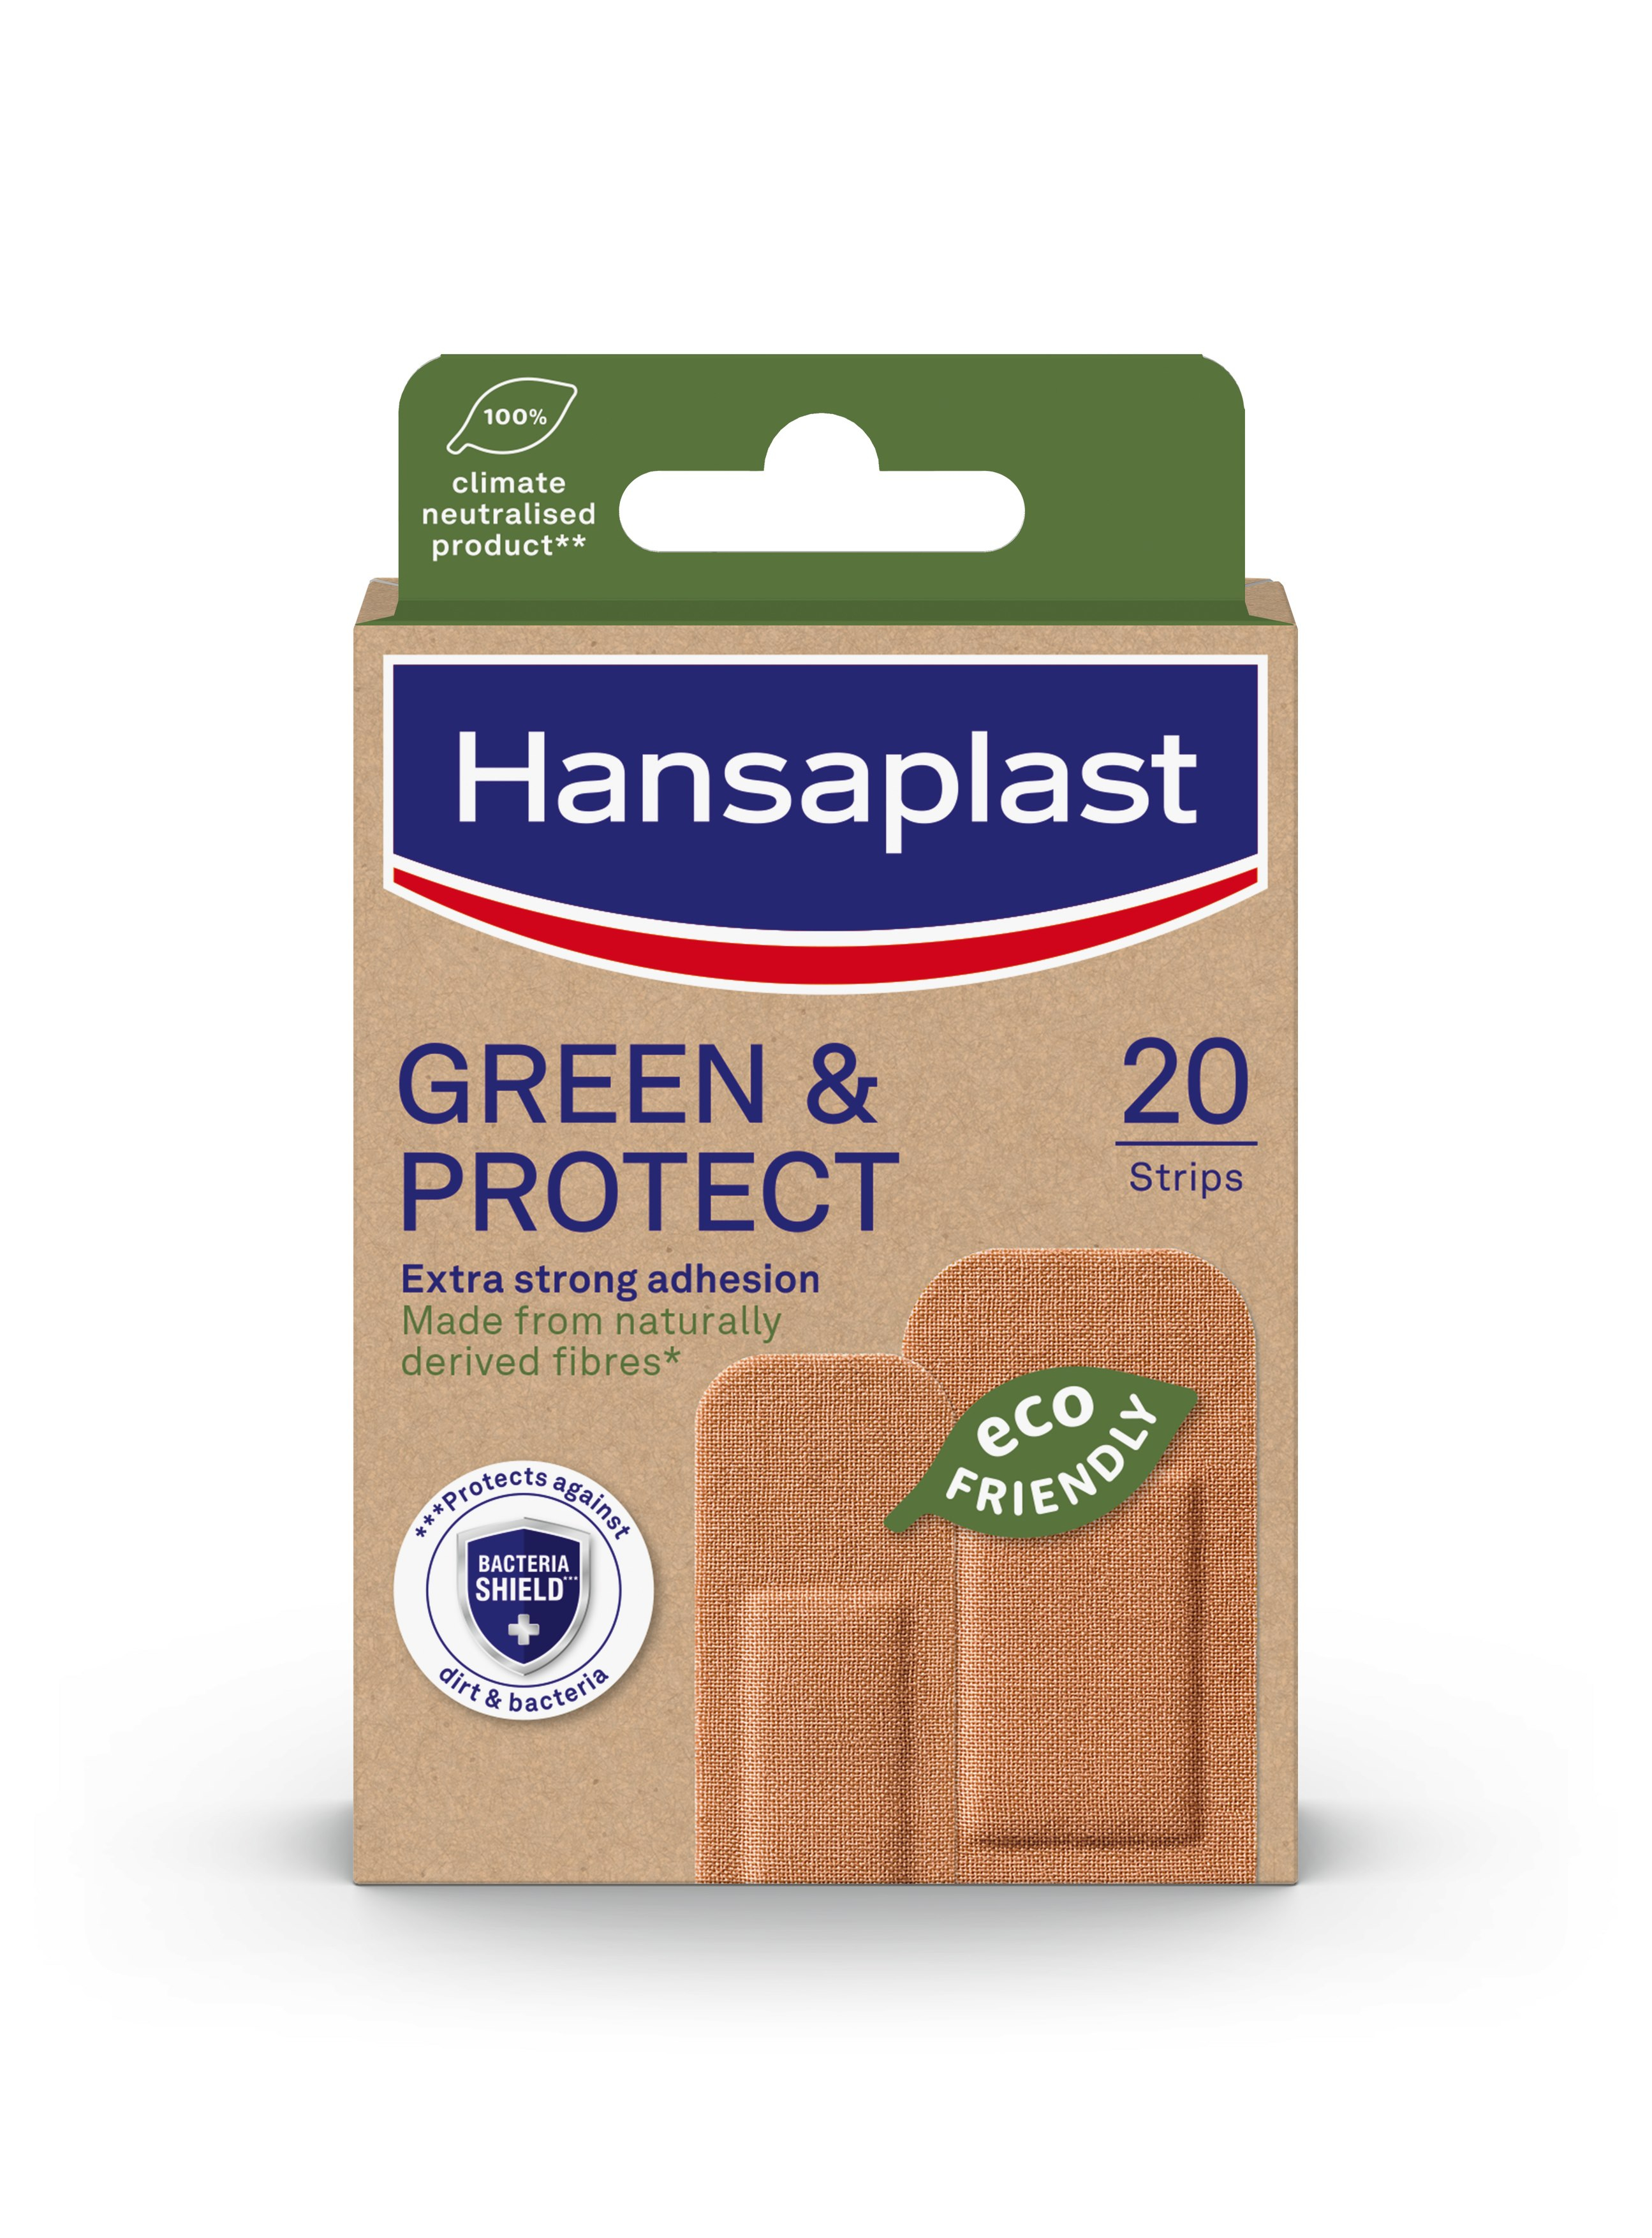 'Hansaplast Green & Protect'